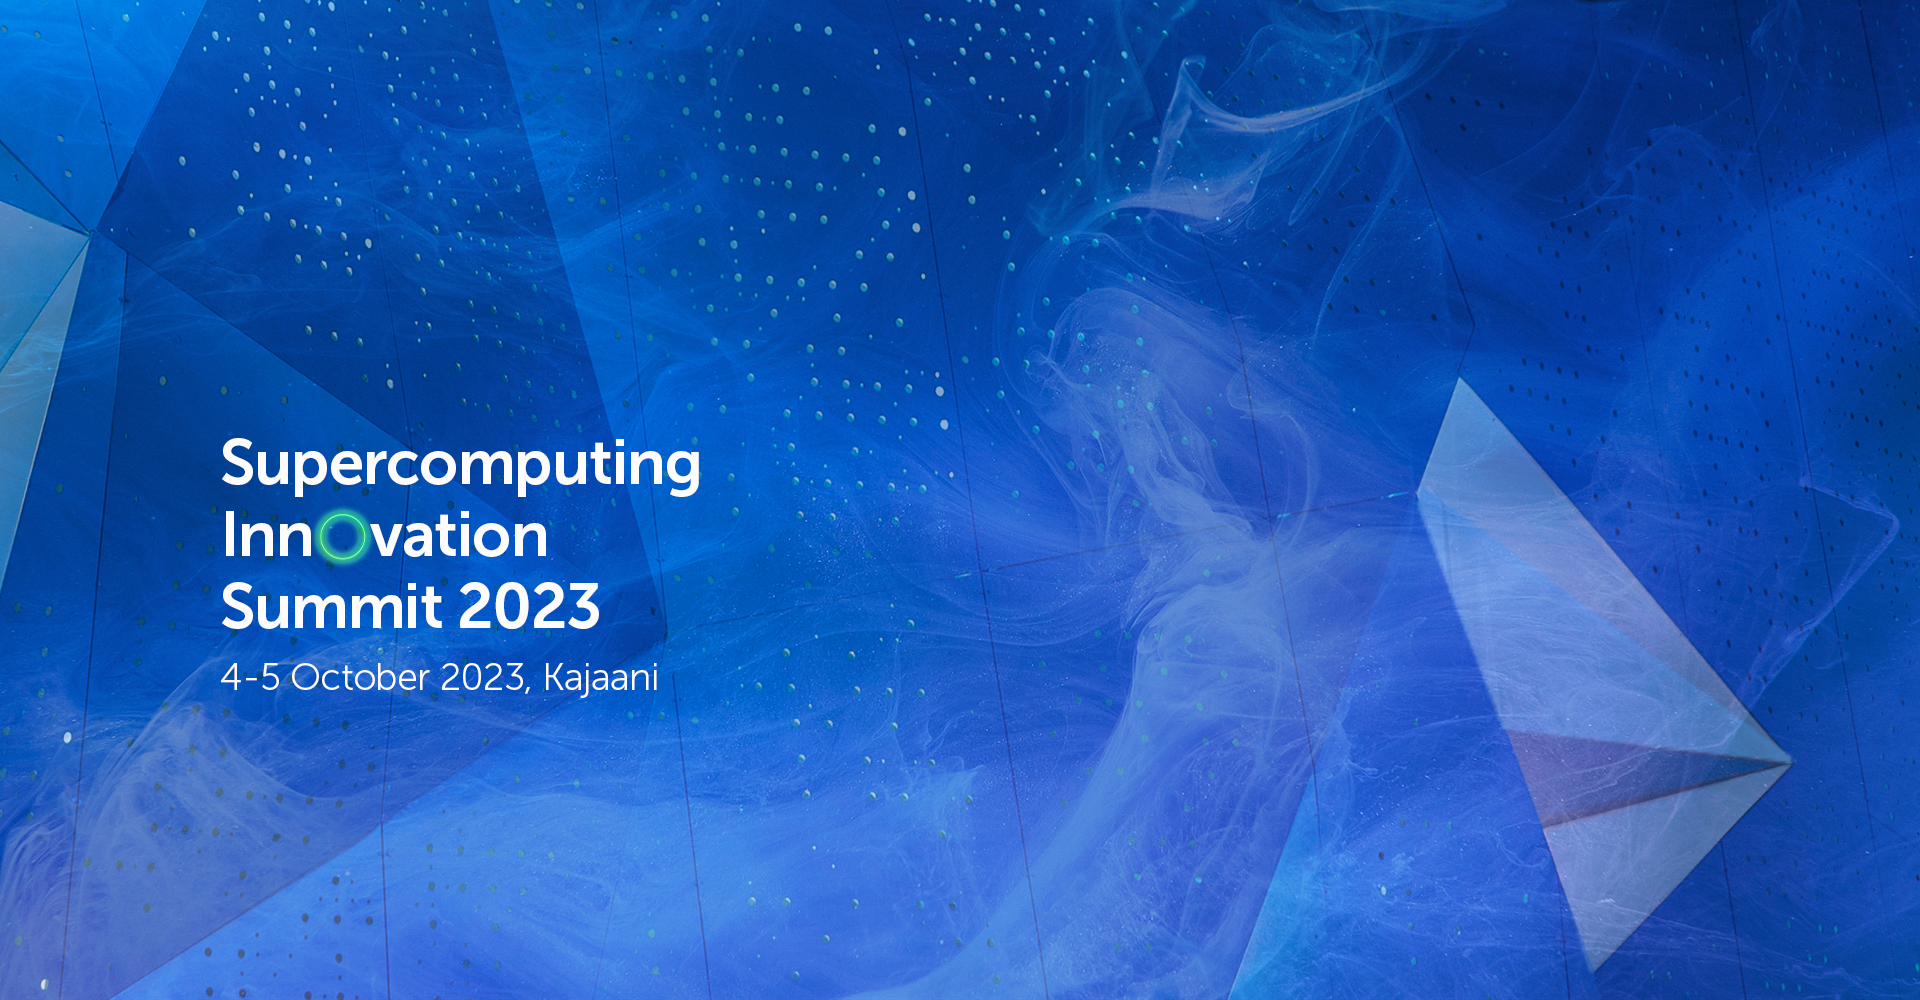 Supercomputing Innovation Summit 2023